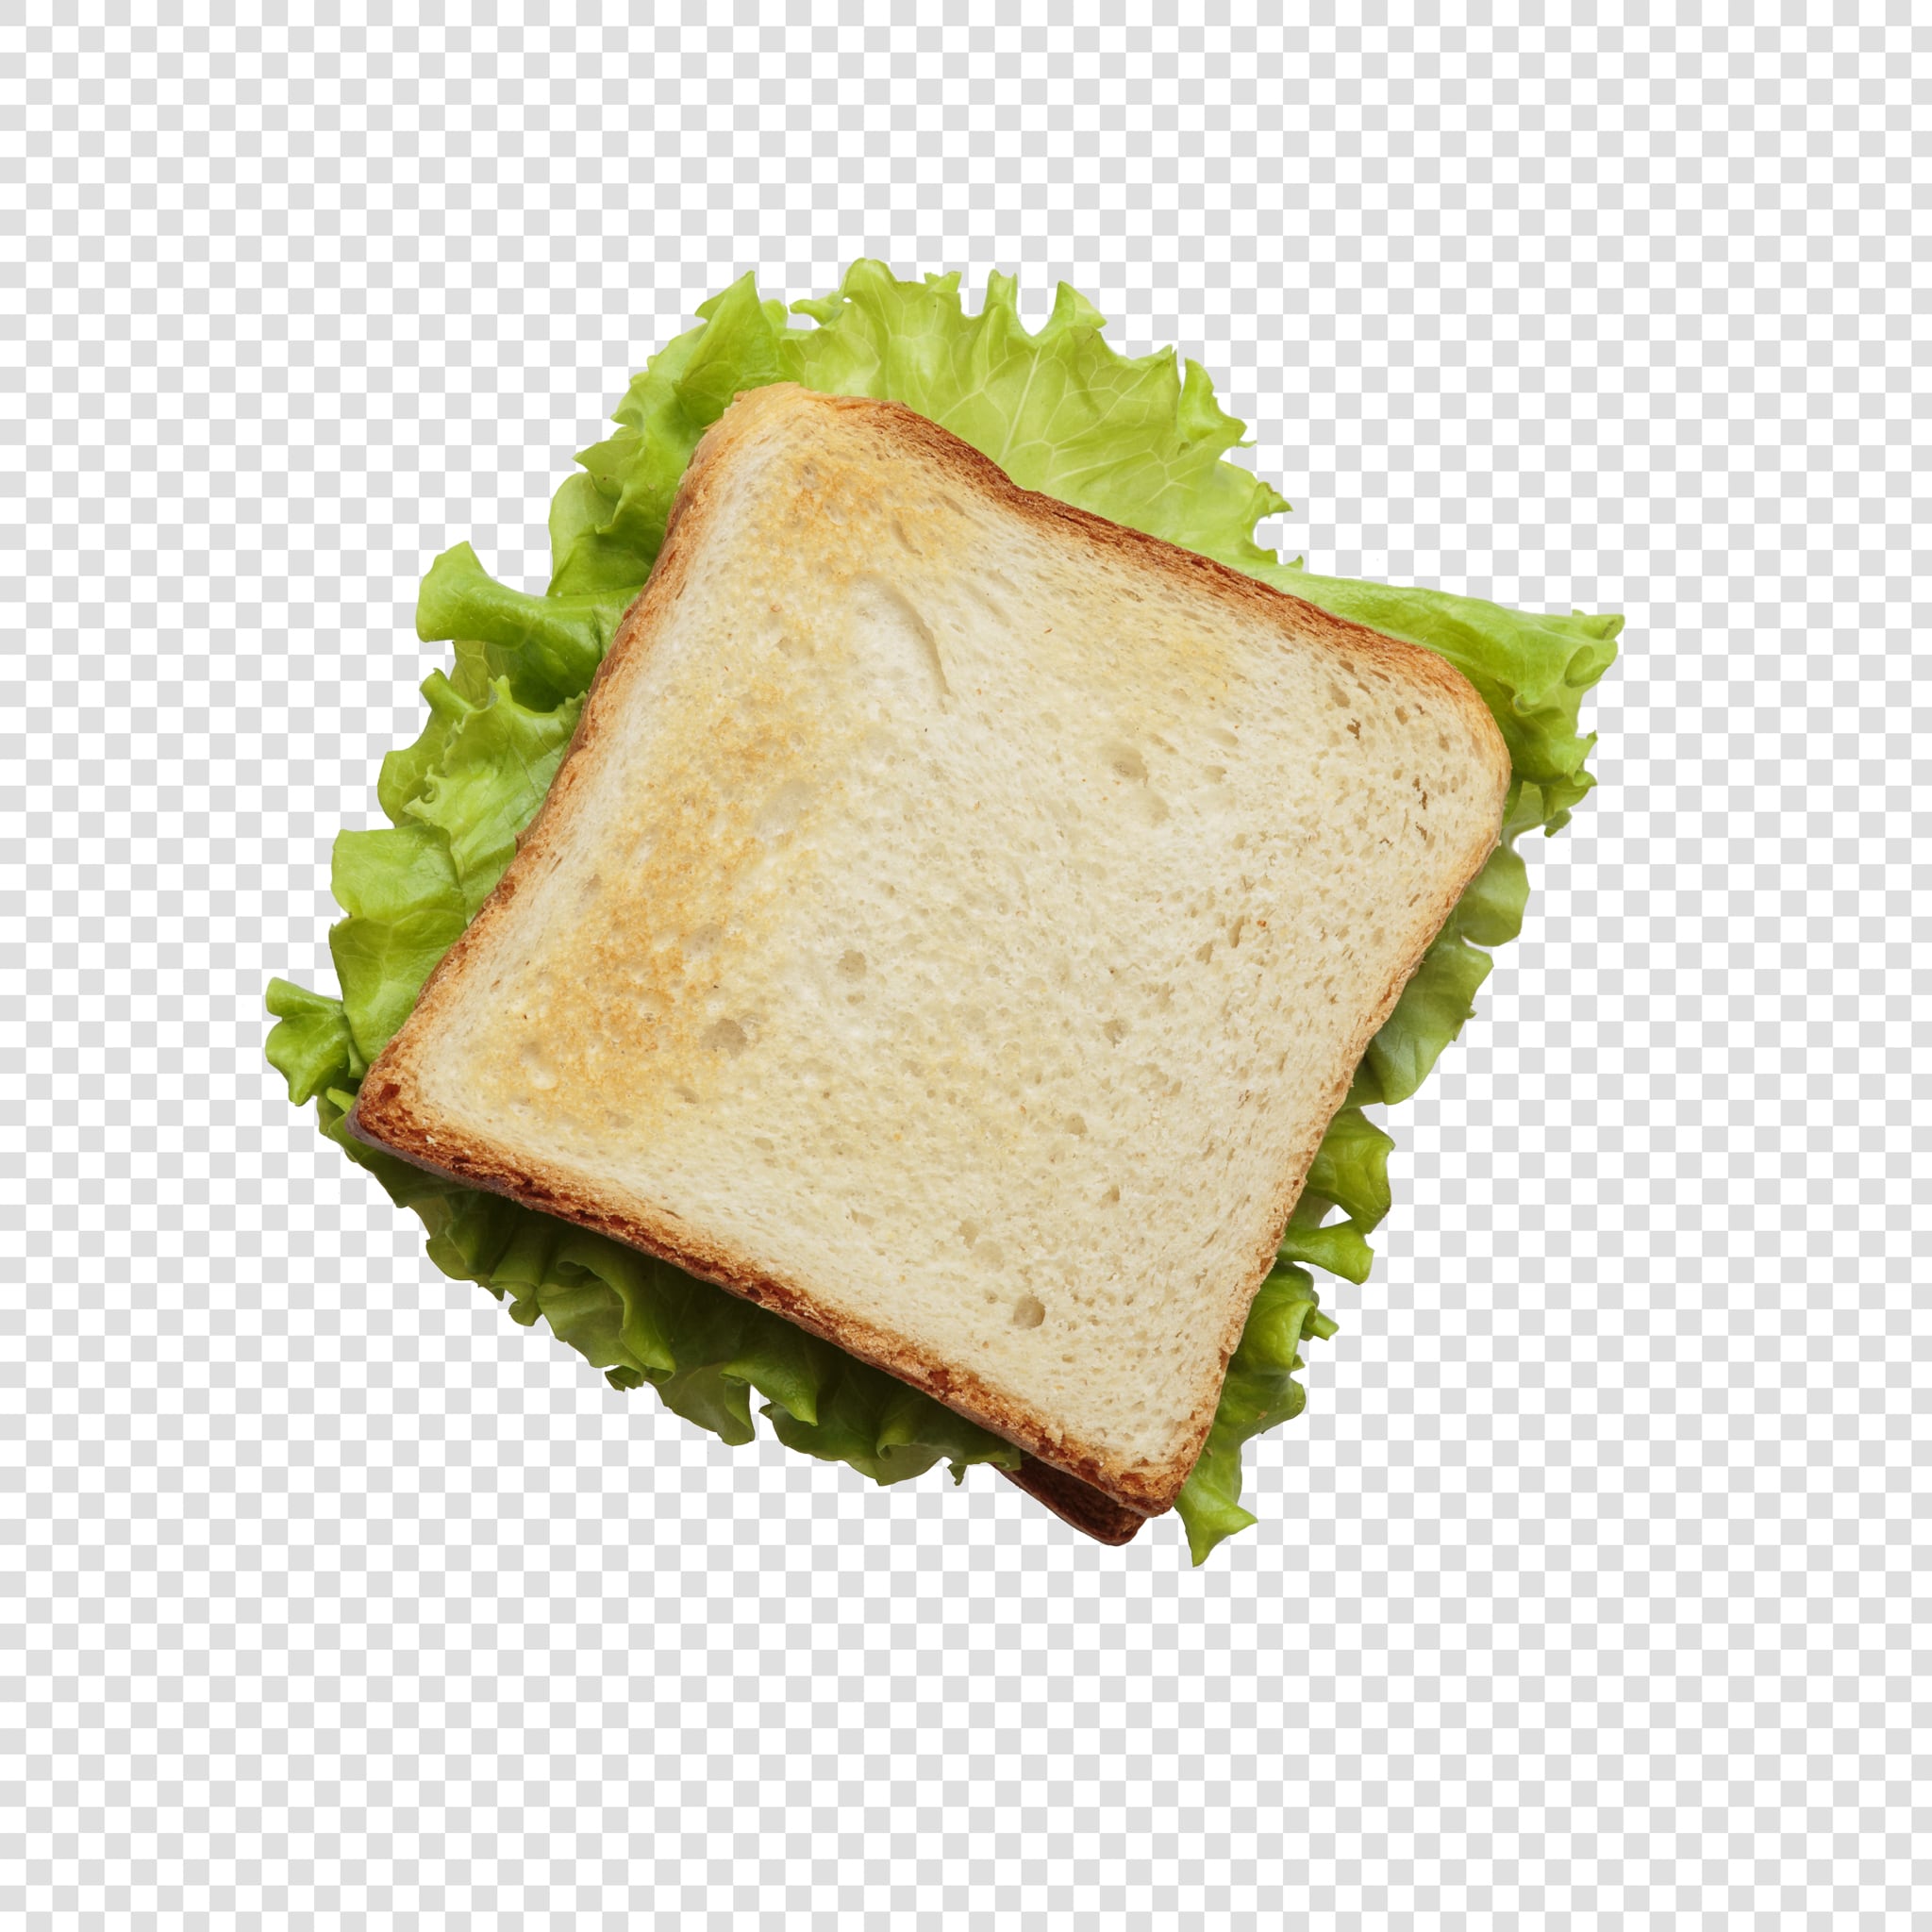 Bread PSD layered image